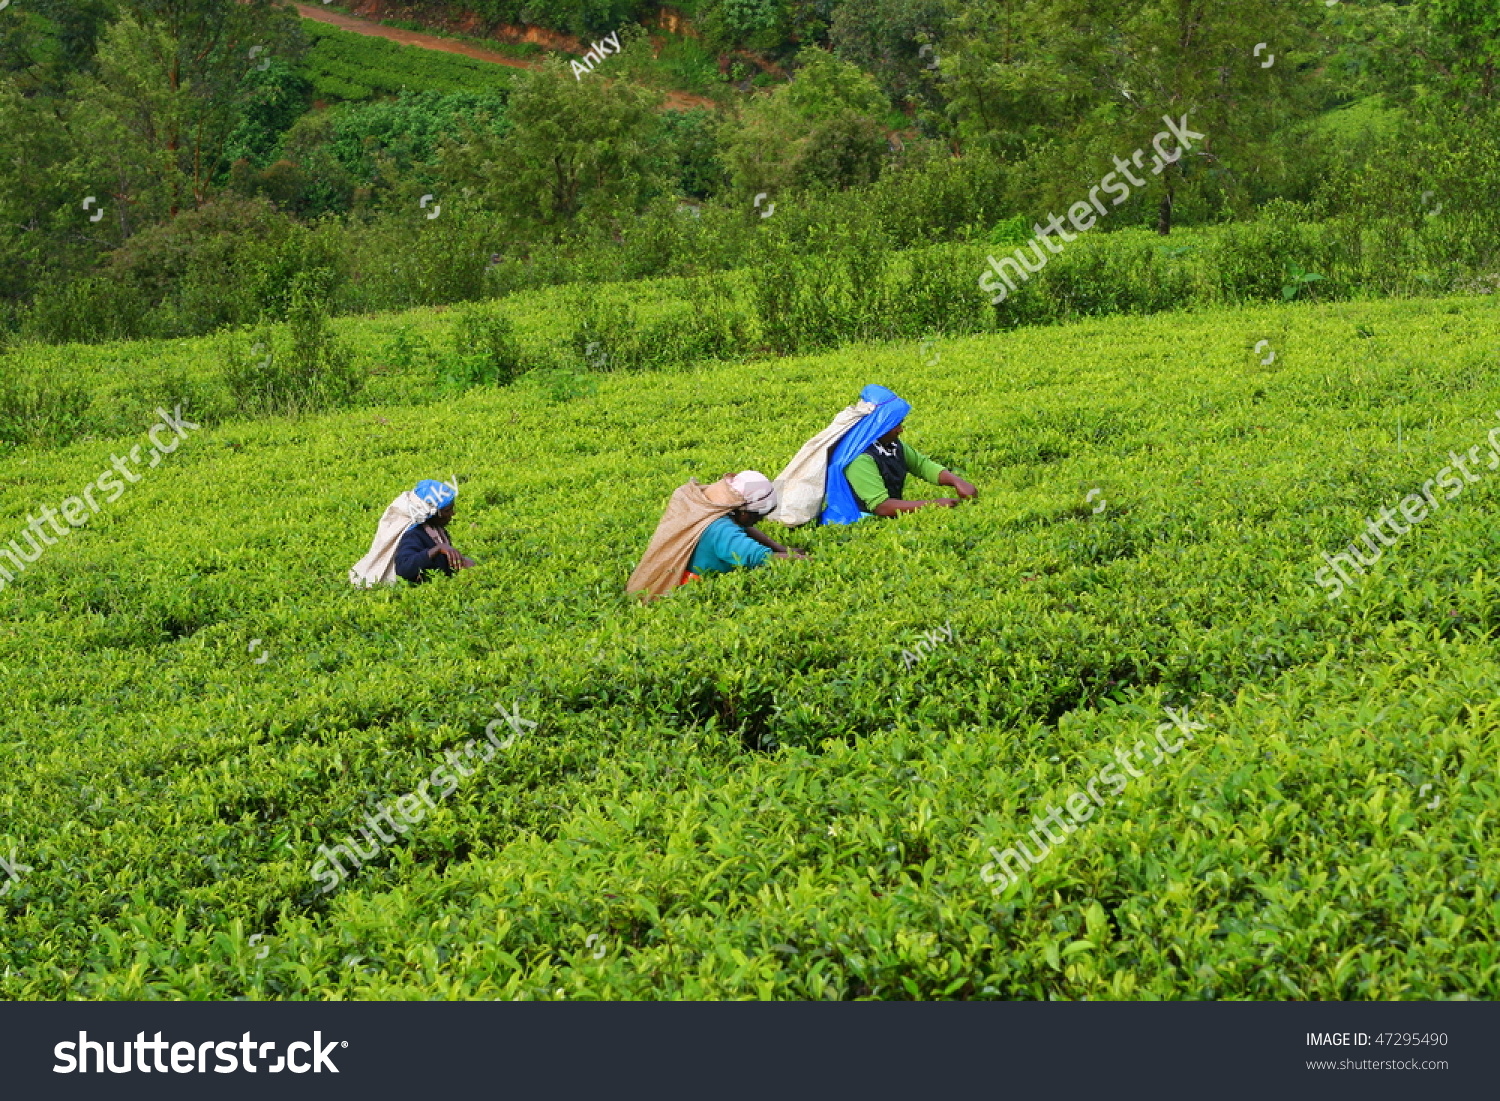 Tea plantation with workers in Nuwara Eliya, Sri Lanka #47295490